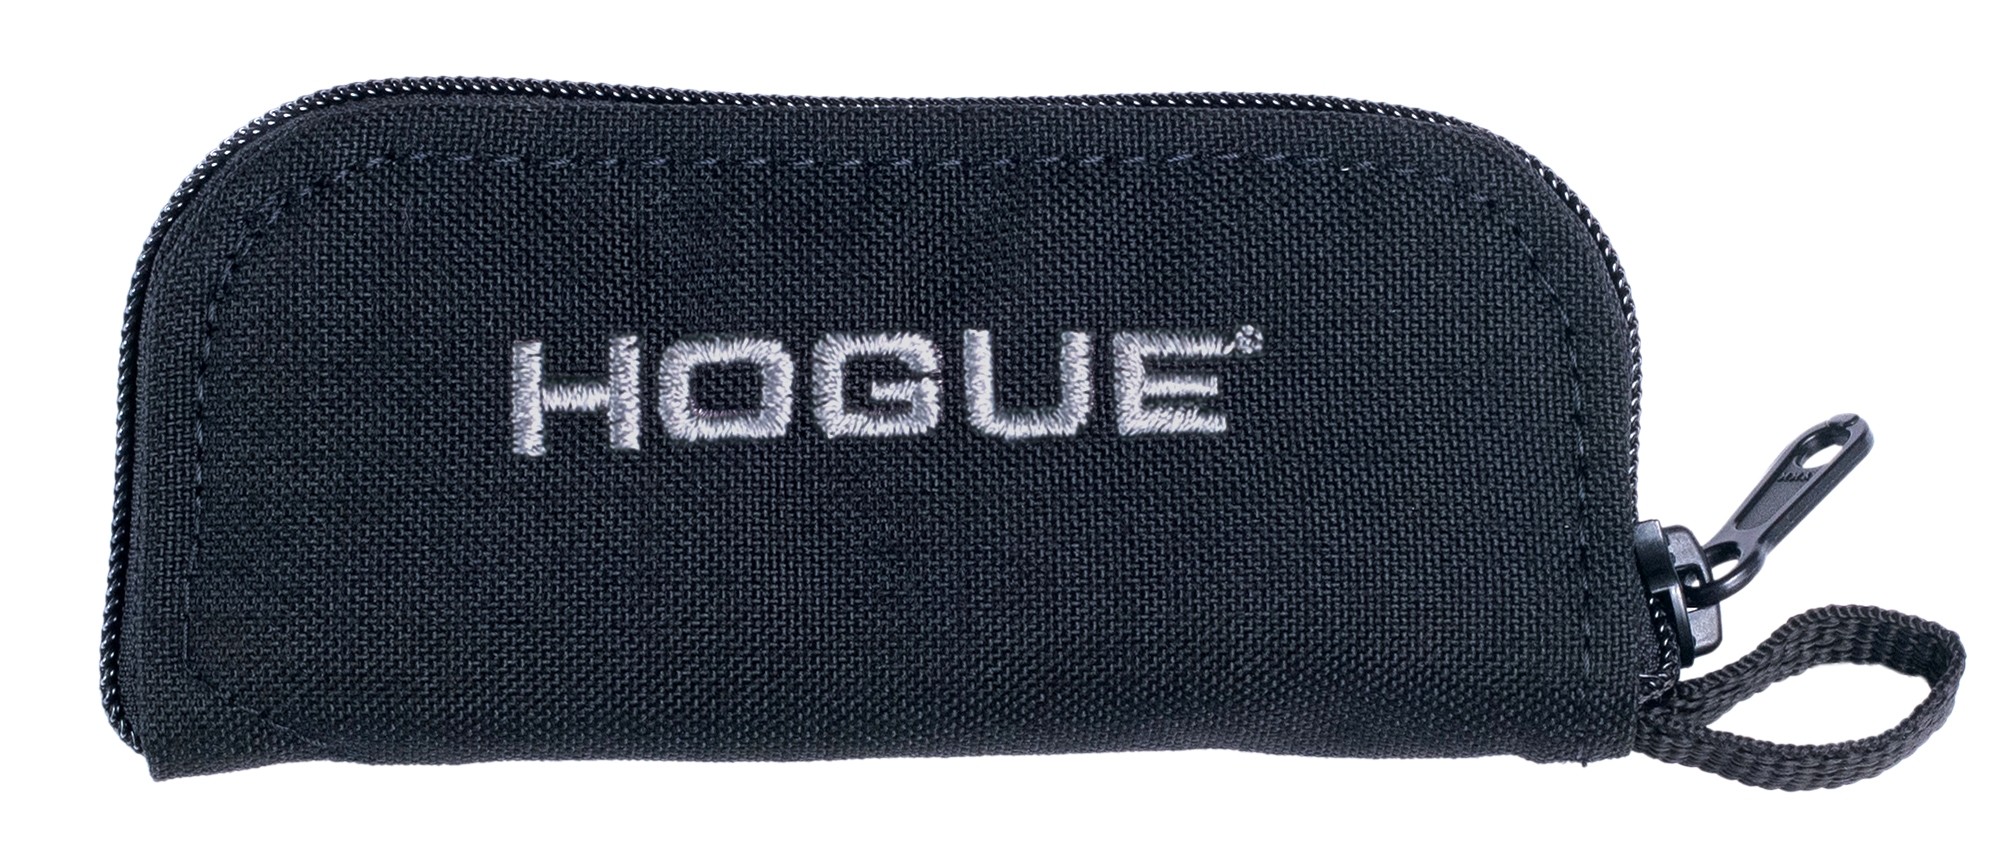 Hogue Gear Knife Pouch (Medium) - Black